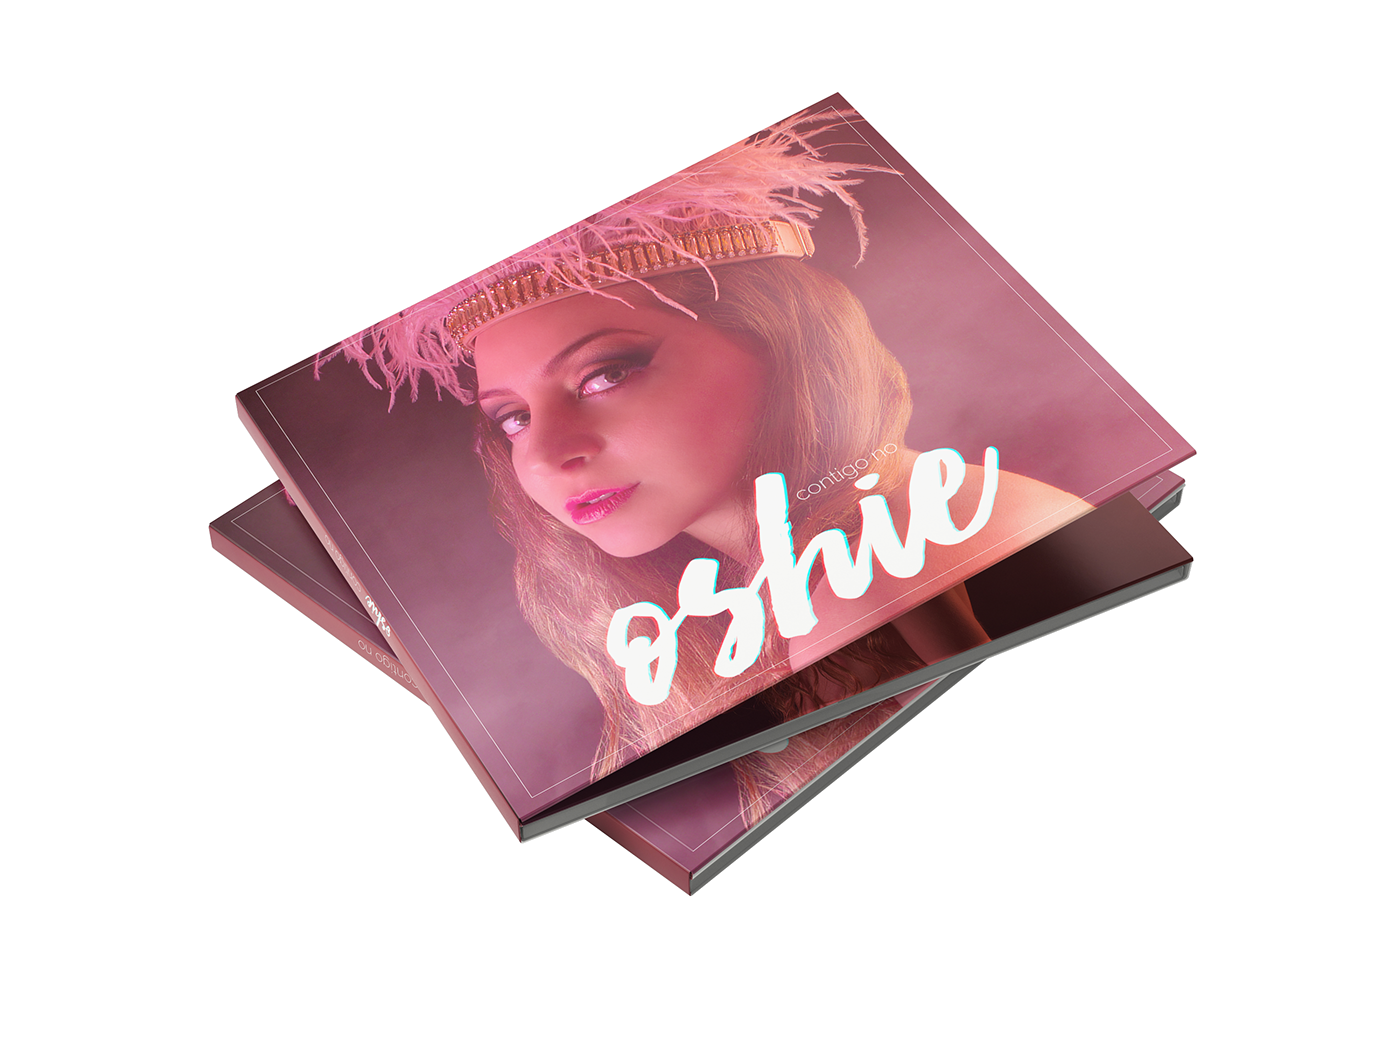 Photography  cover art model oshie smoke girl music